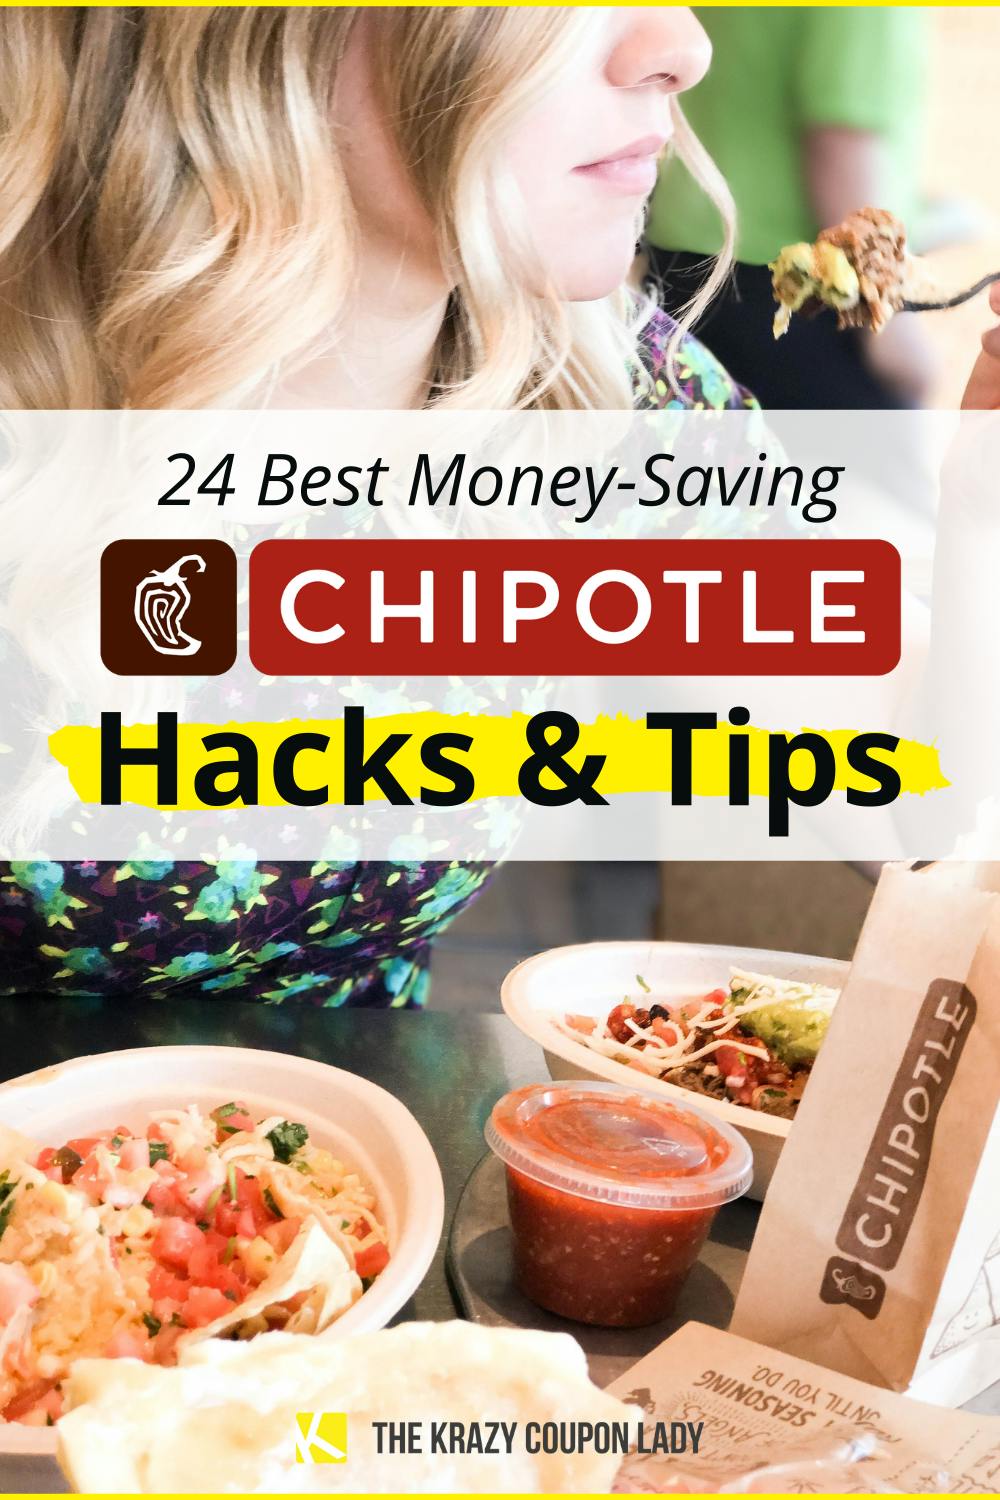 24 Hacks to Get Free Chipotle, Rewards & More